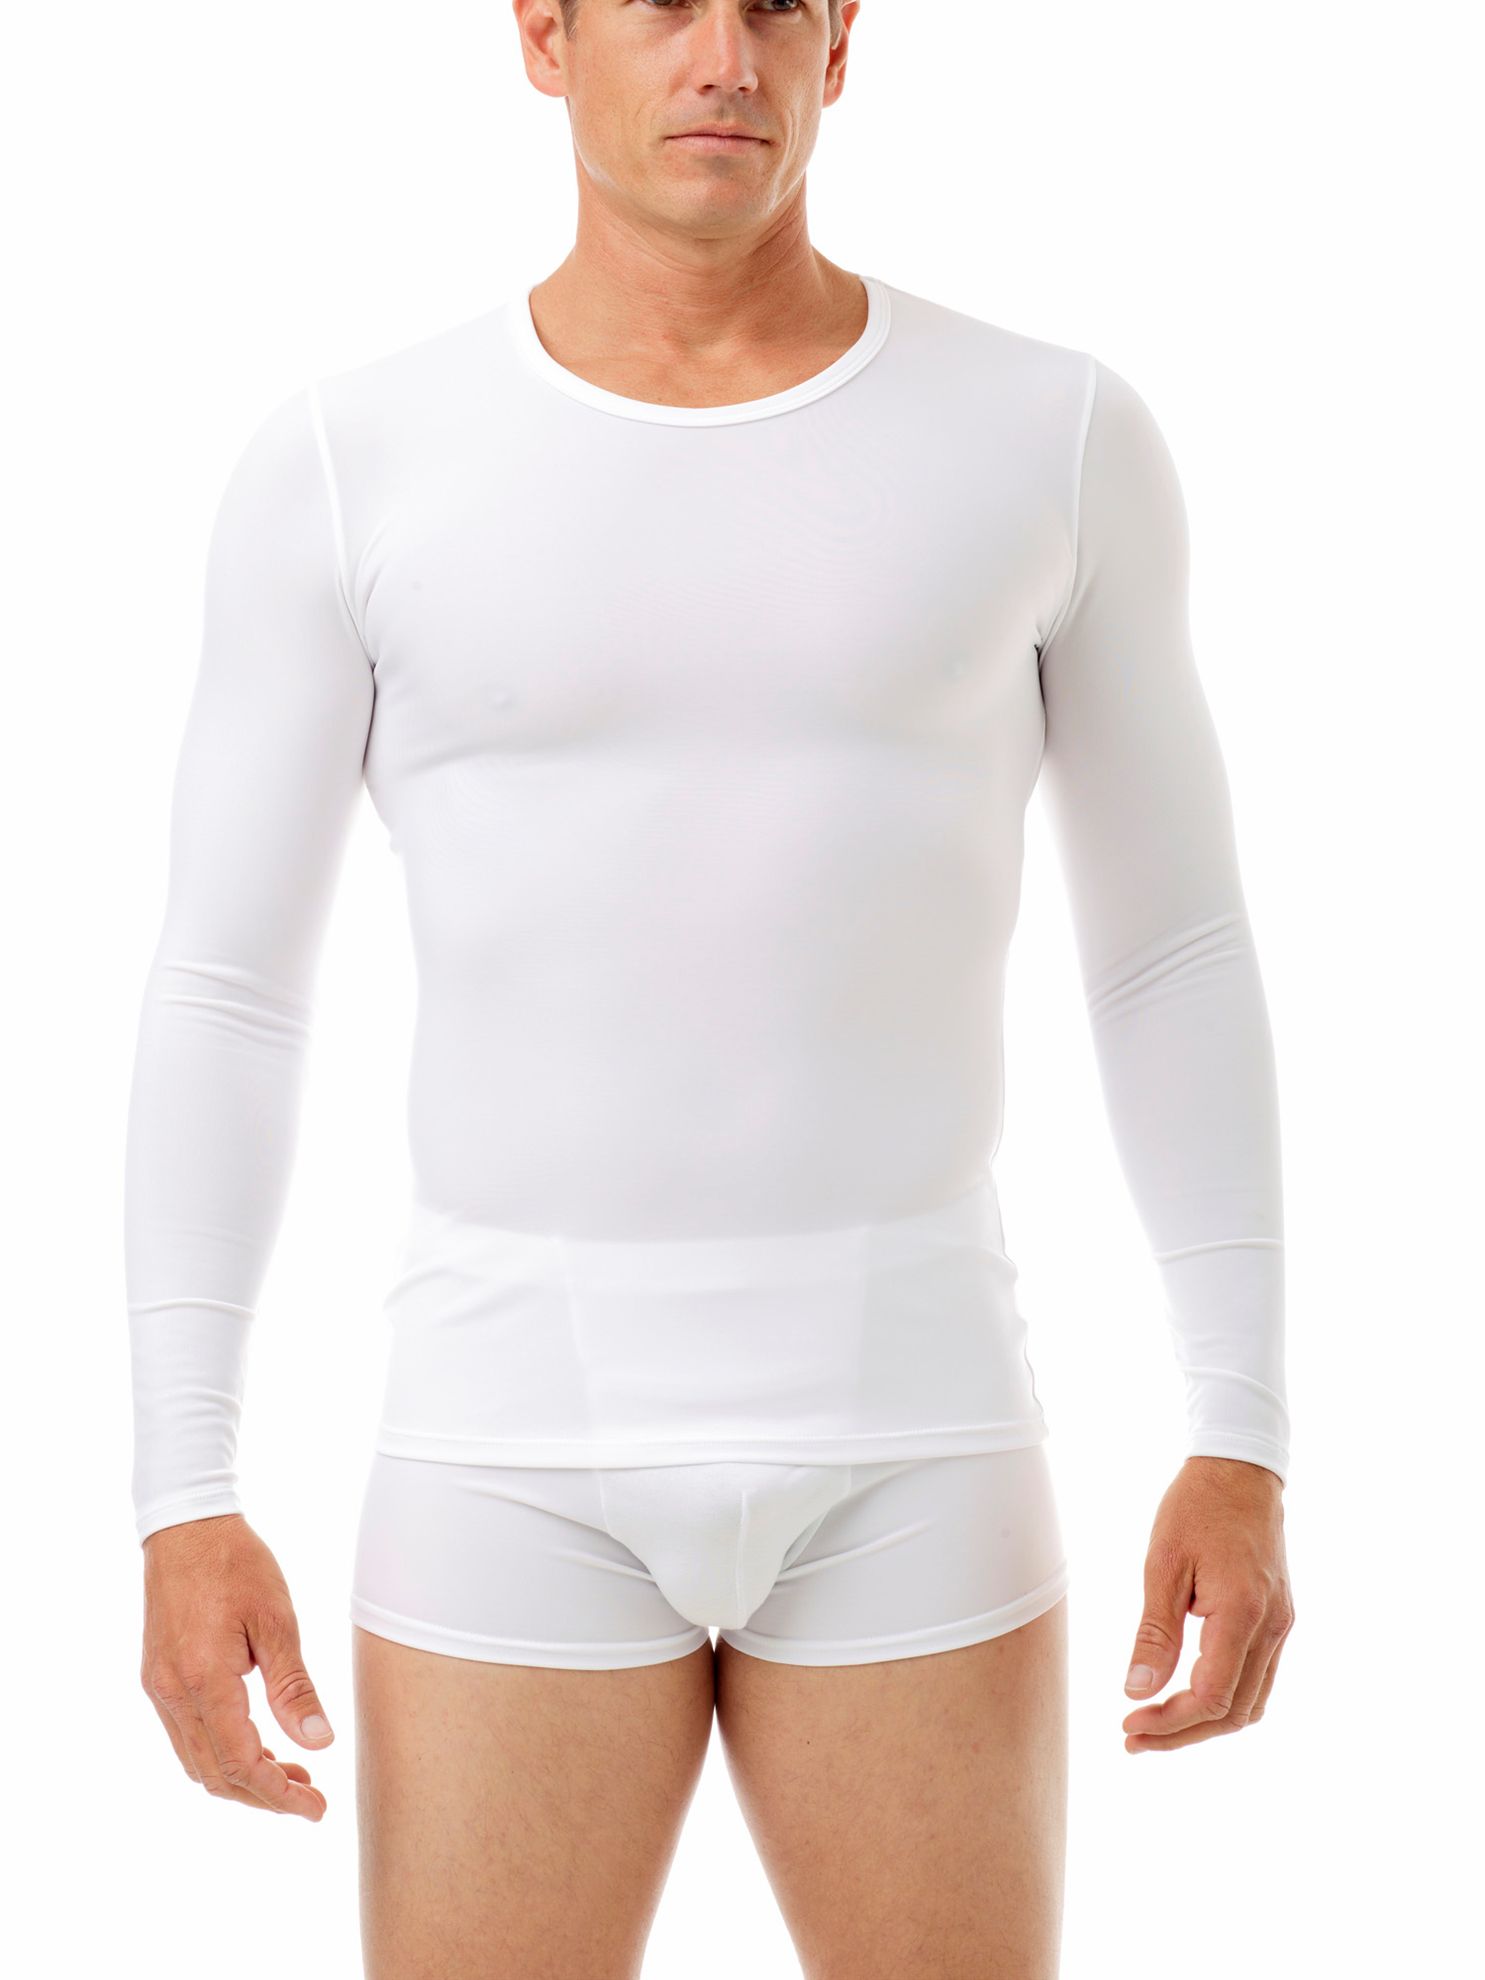 Cotton Concealer Chest Binder, Men Compression Garments